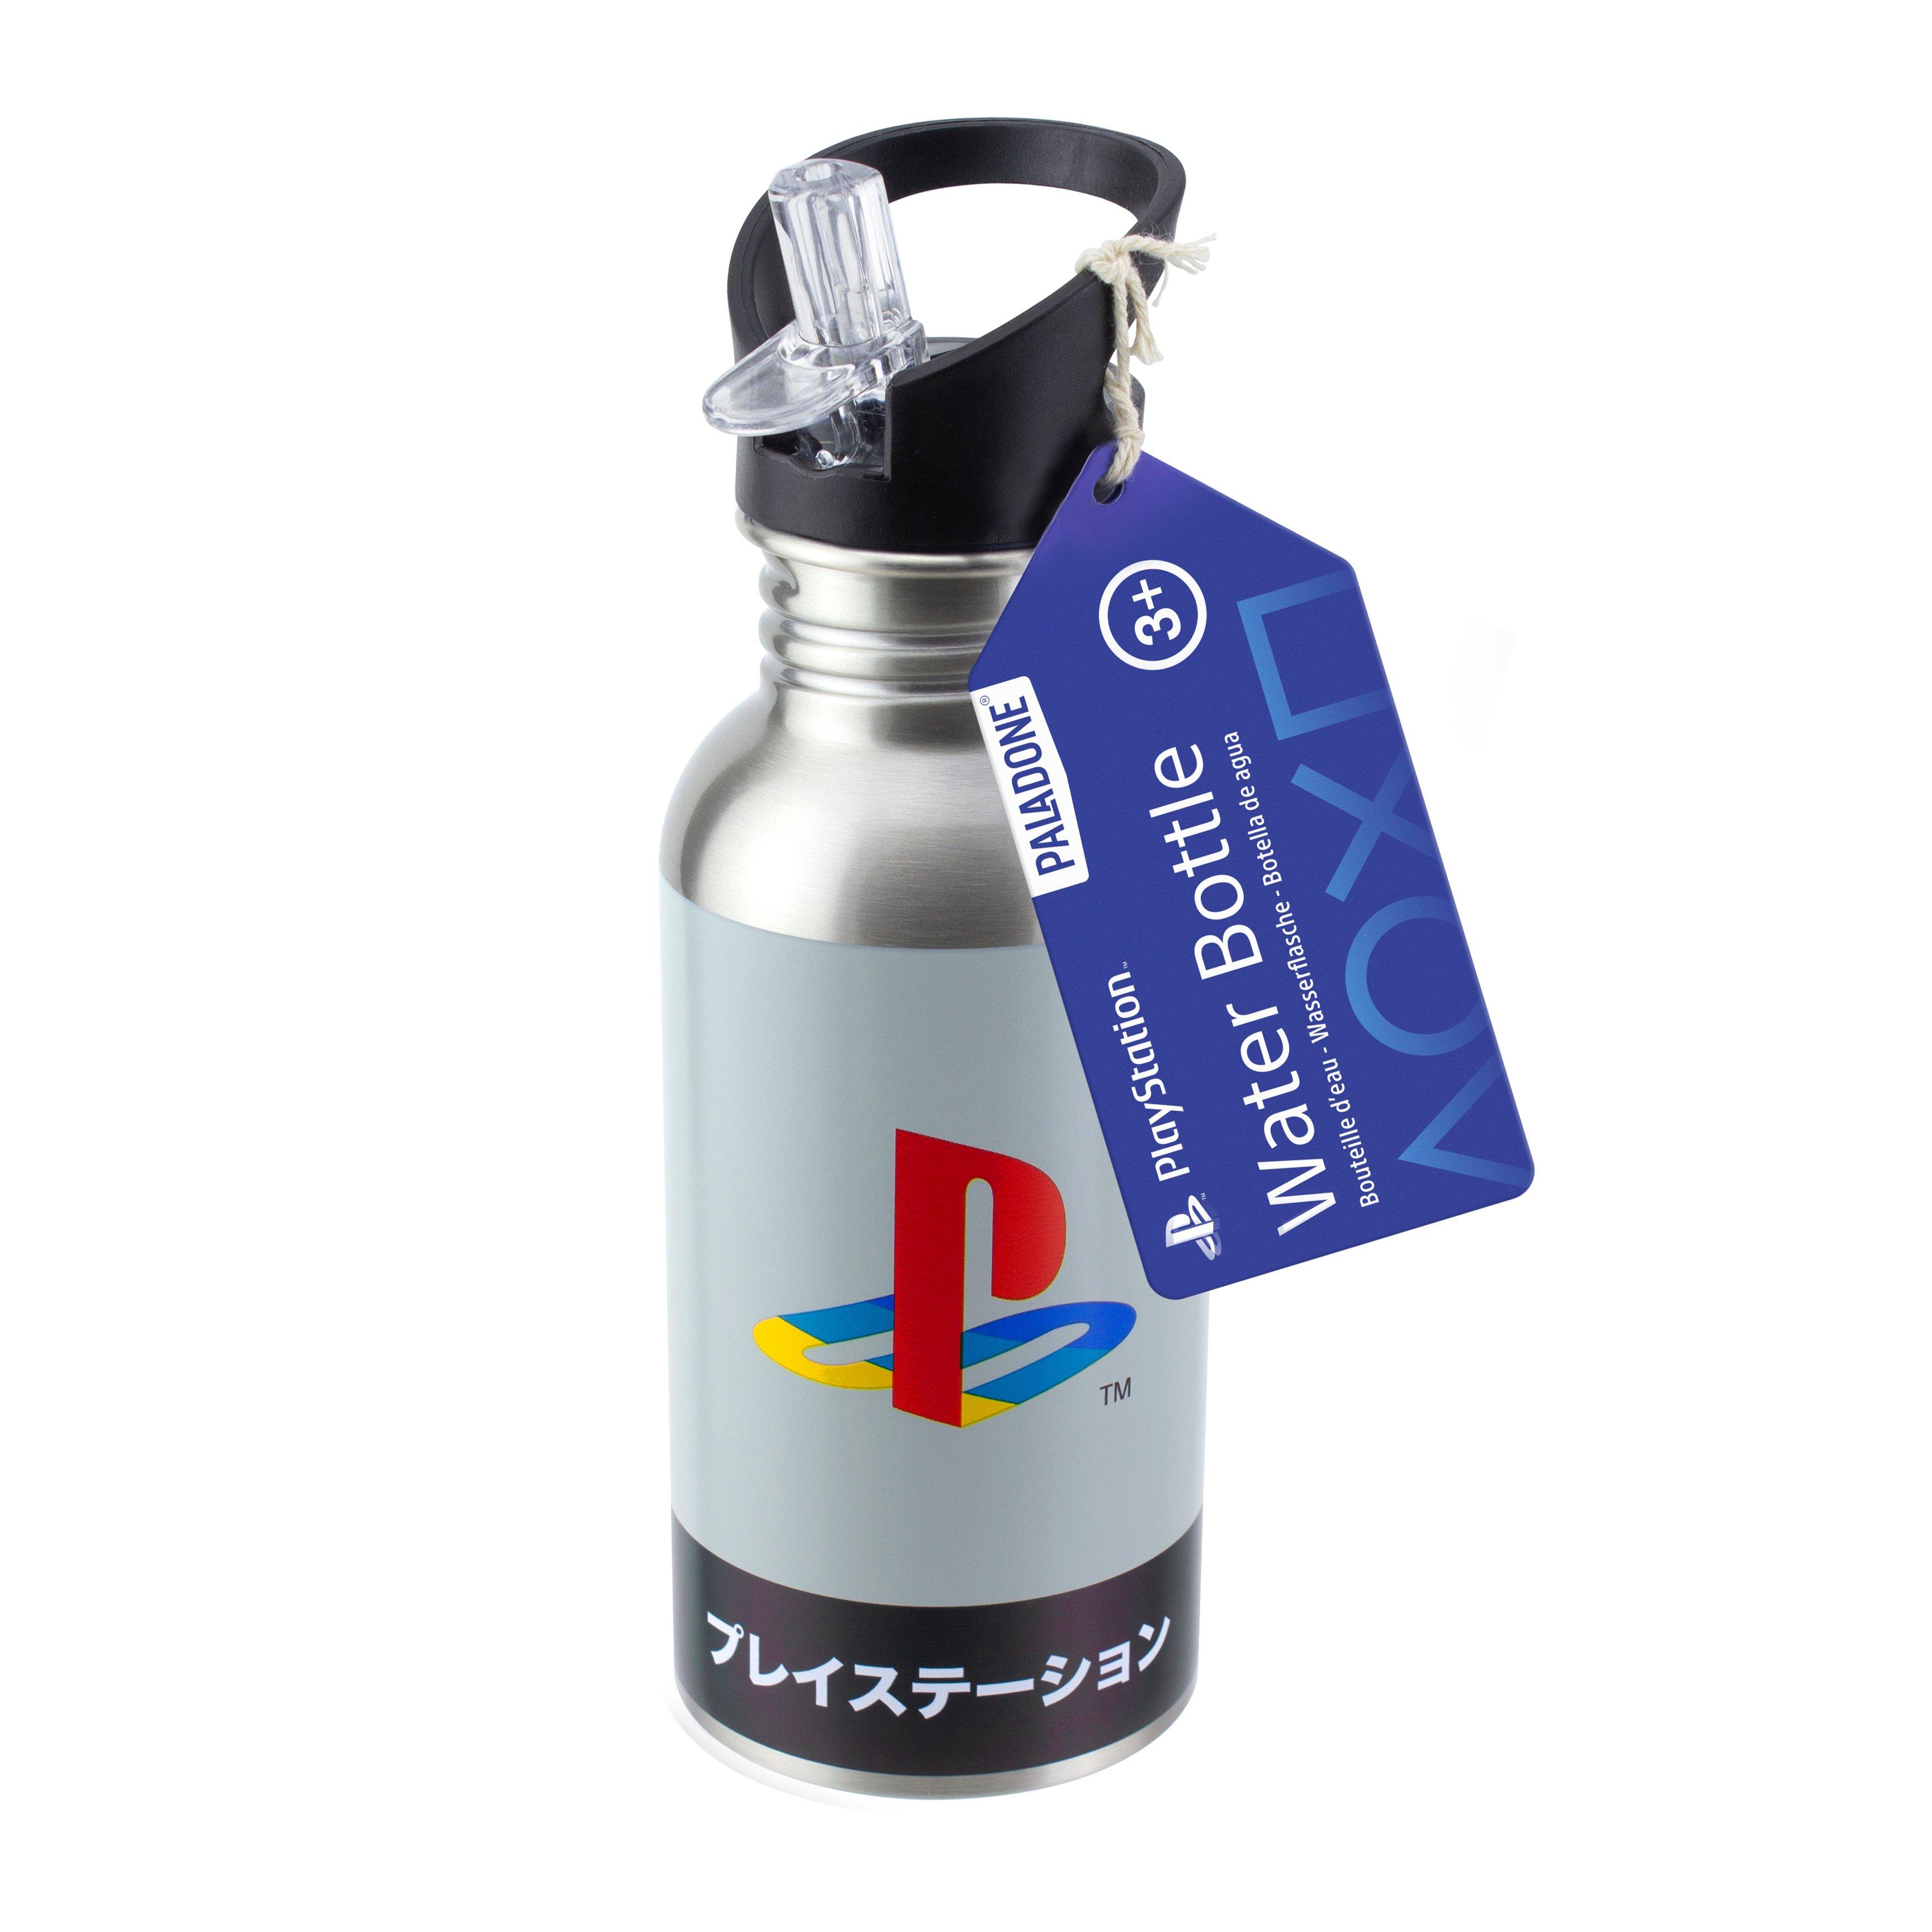 https://media.gamestop.com/i/gamestop/11165657_ALT02/Playstation-Heritage-Metal-Water-Bottle-with-Straw?$pdp$